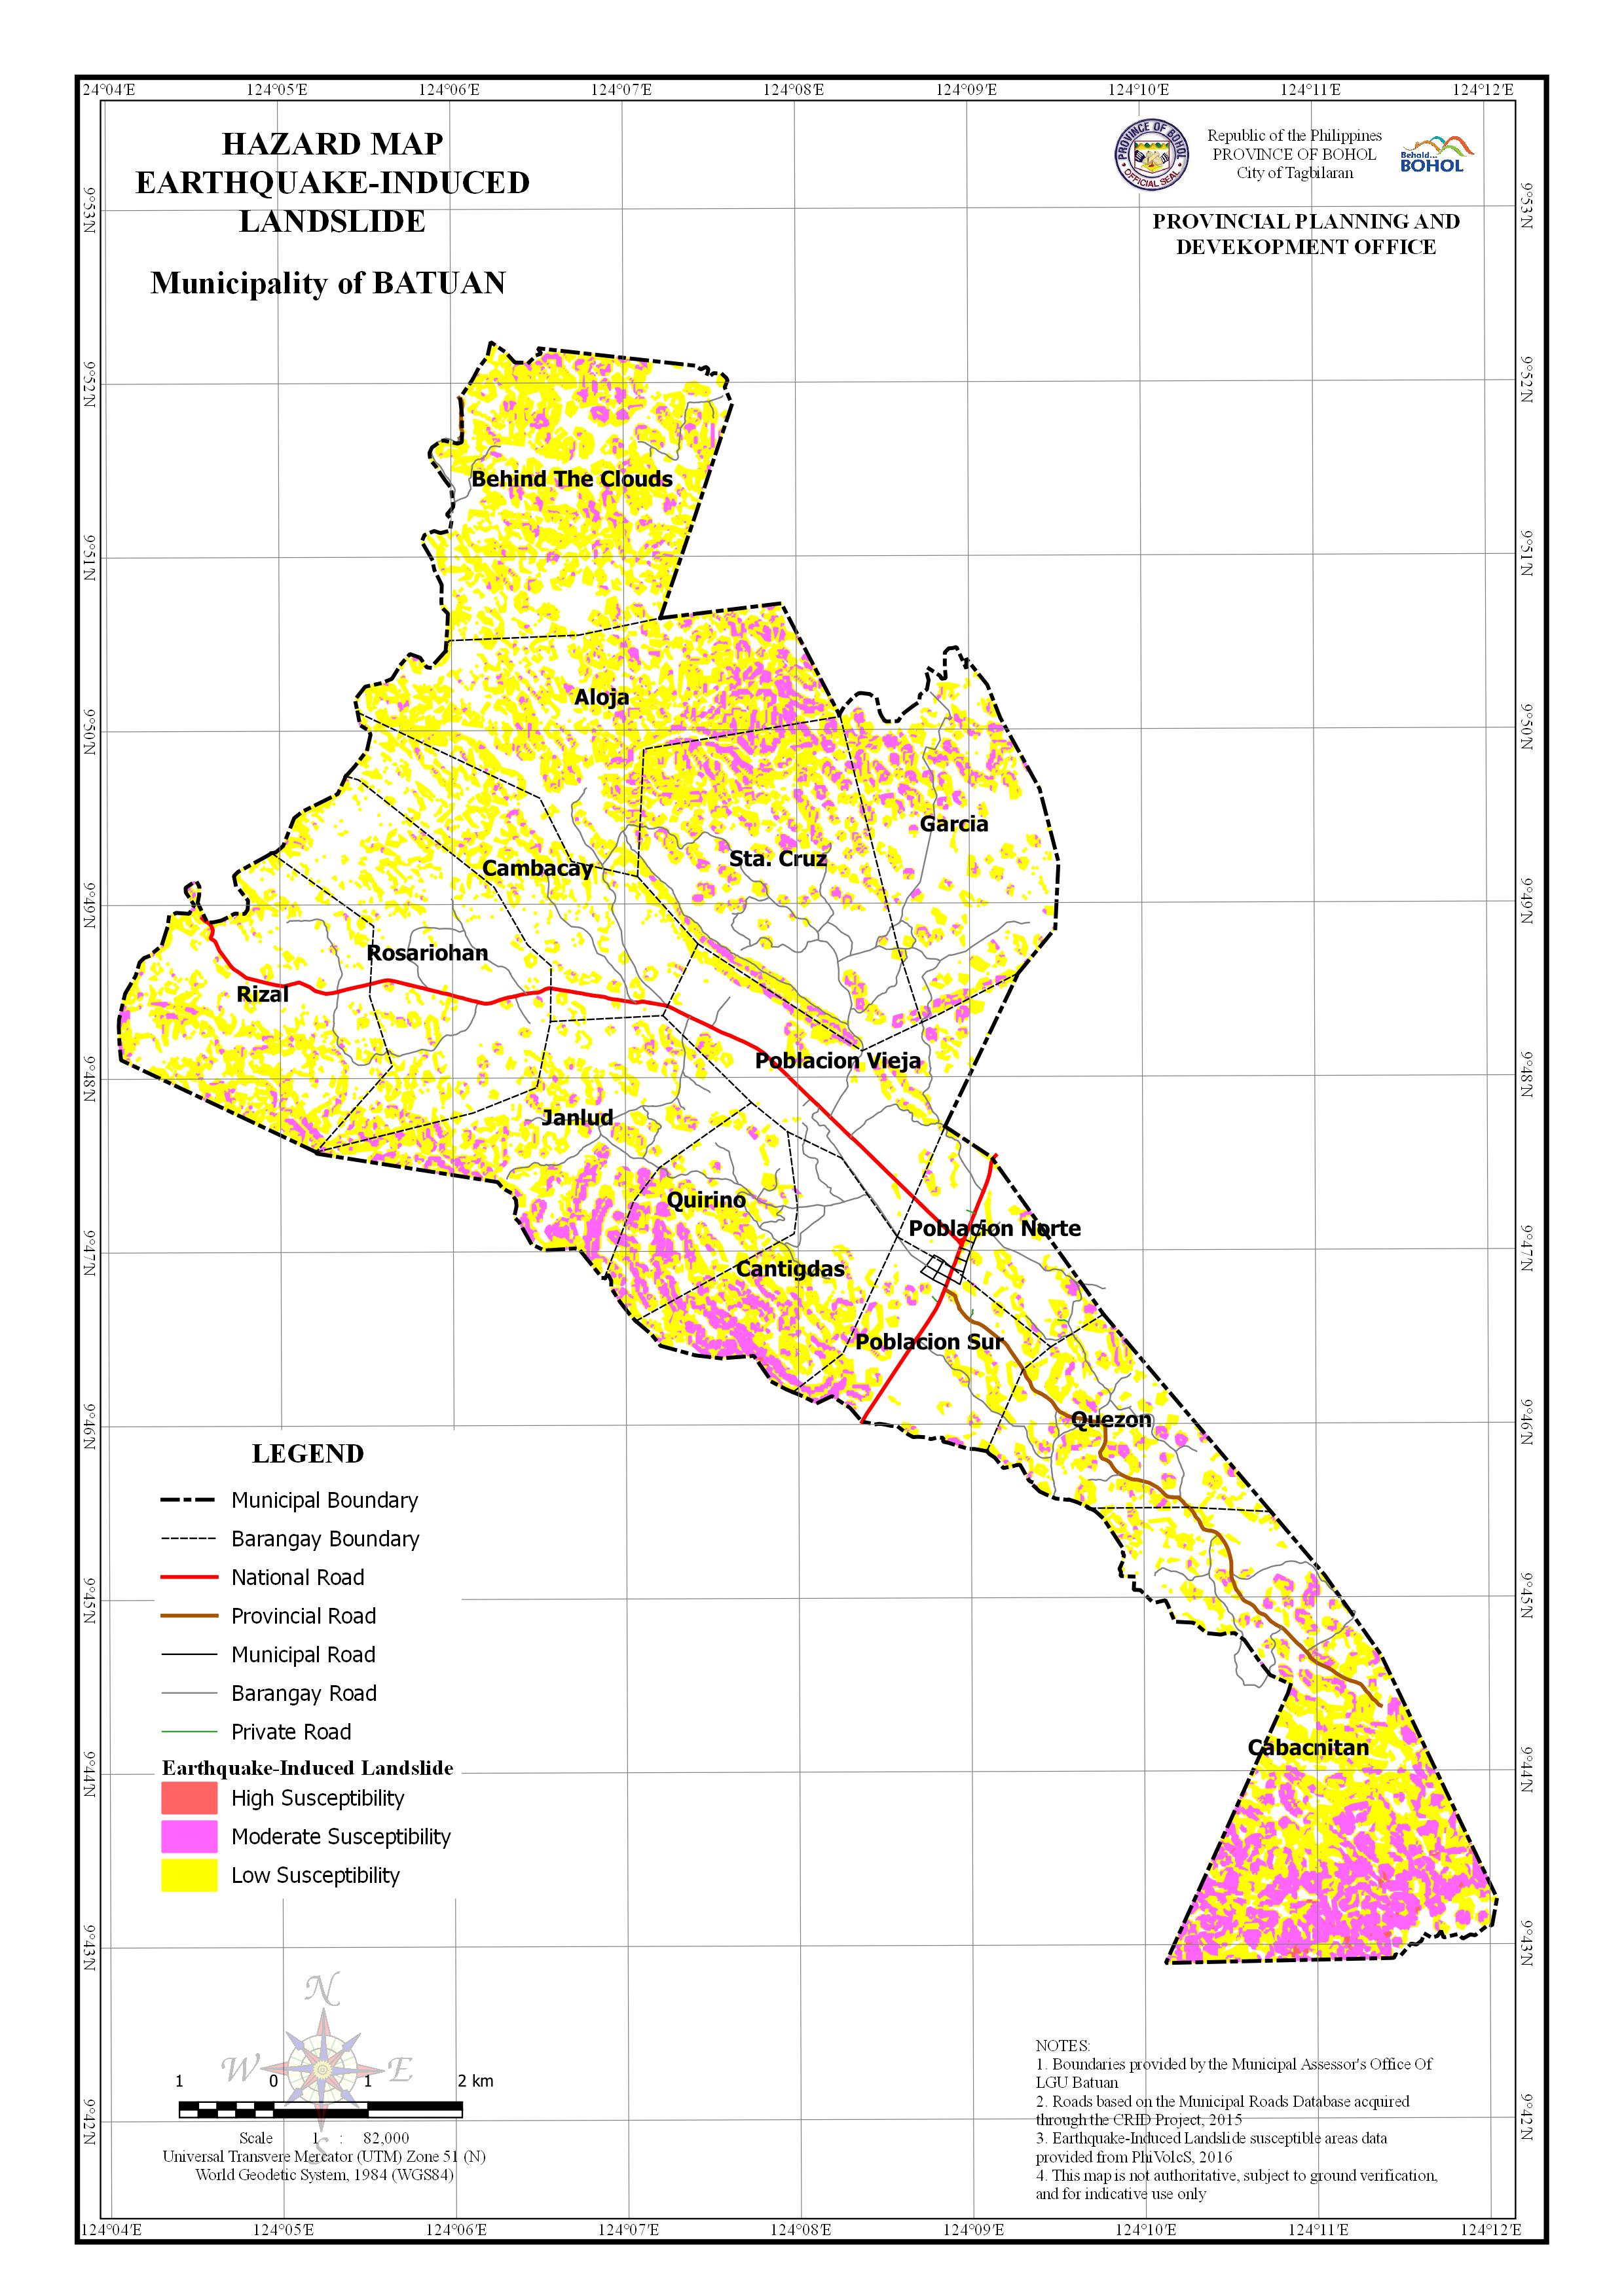 Municipality of Batuan Earthquake-Induced Landslide Map